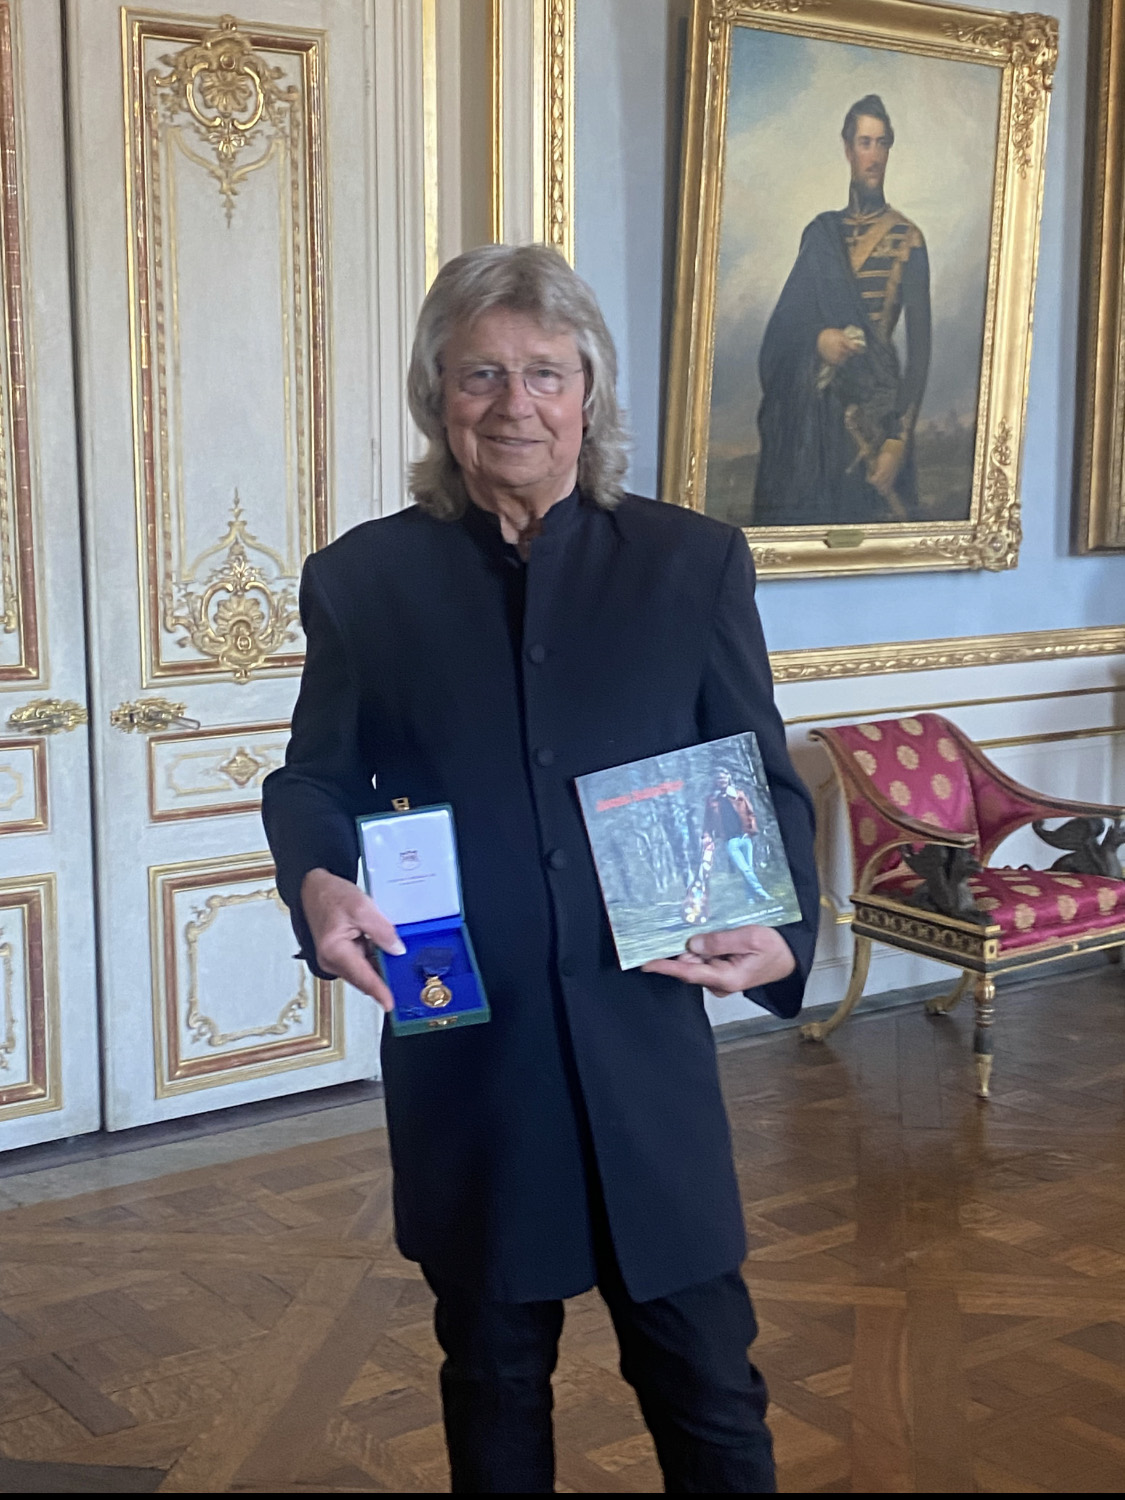 Janne Schaffer Receives Award From the King of Sweden